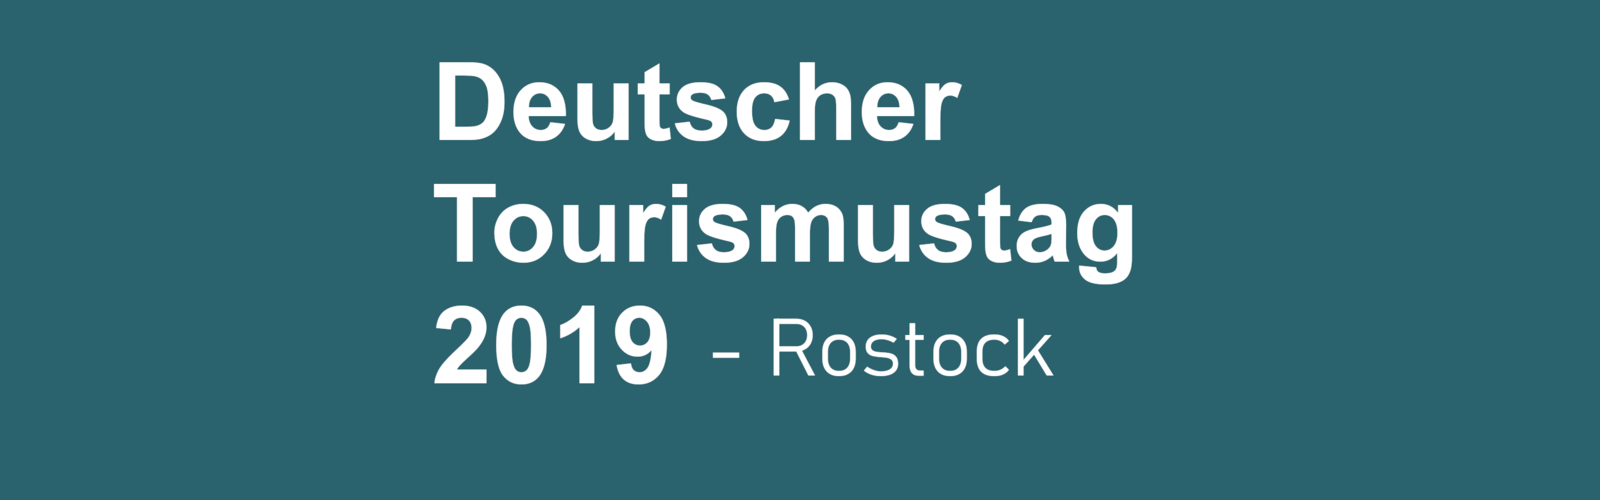 Deutscher Tourismustag 2019,
        
    

        
            Foto: Tourismusverband Dahme-Seen e.V.